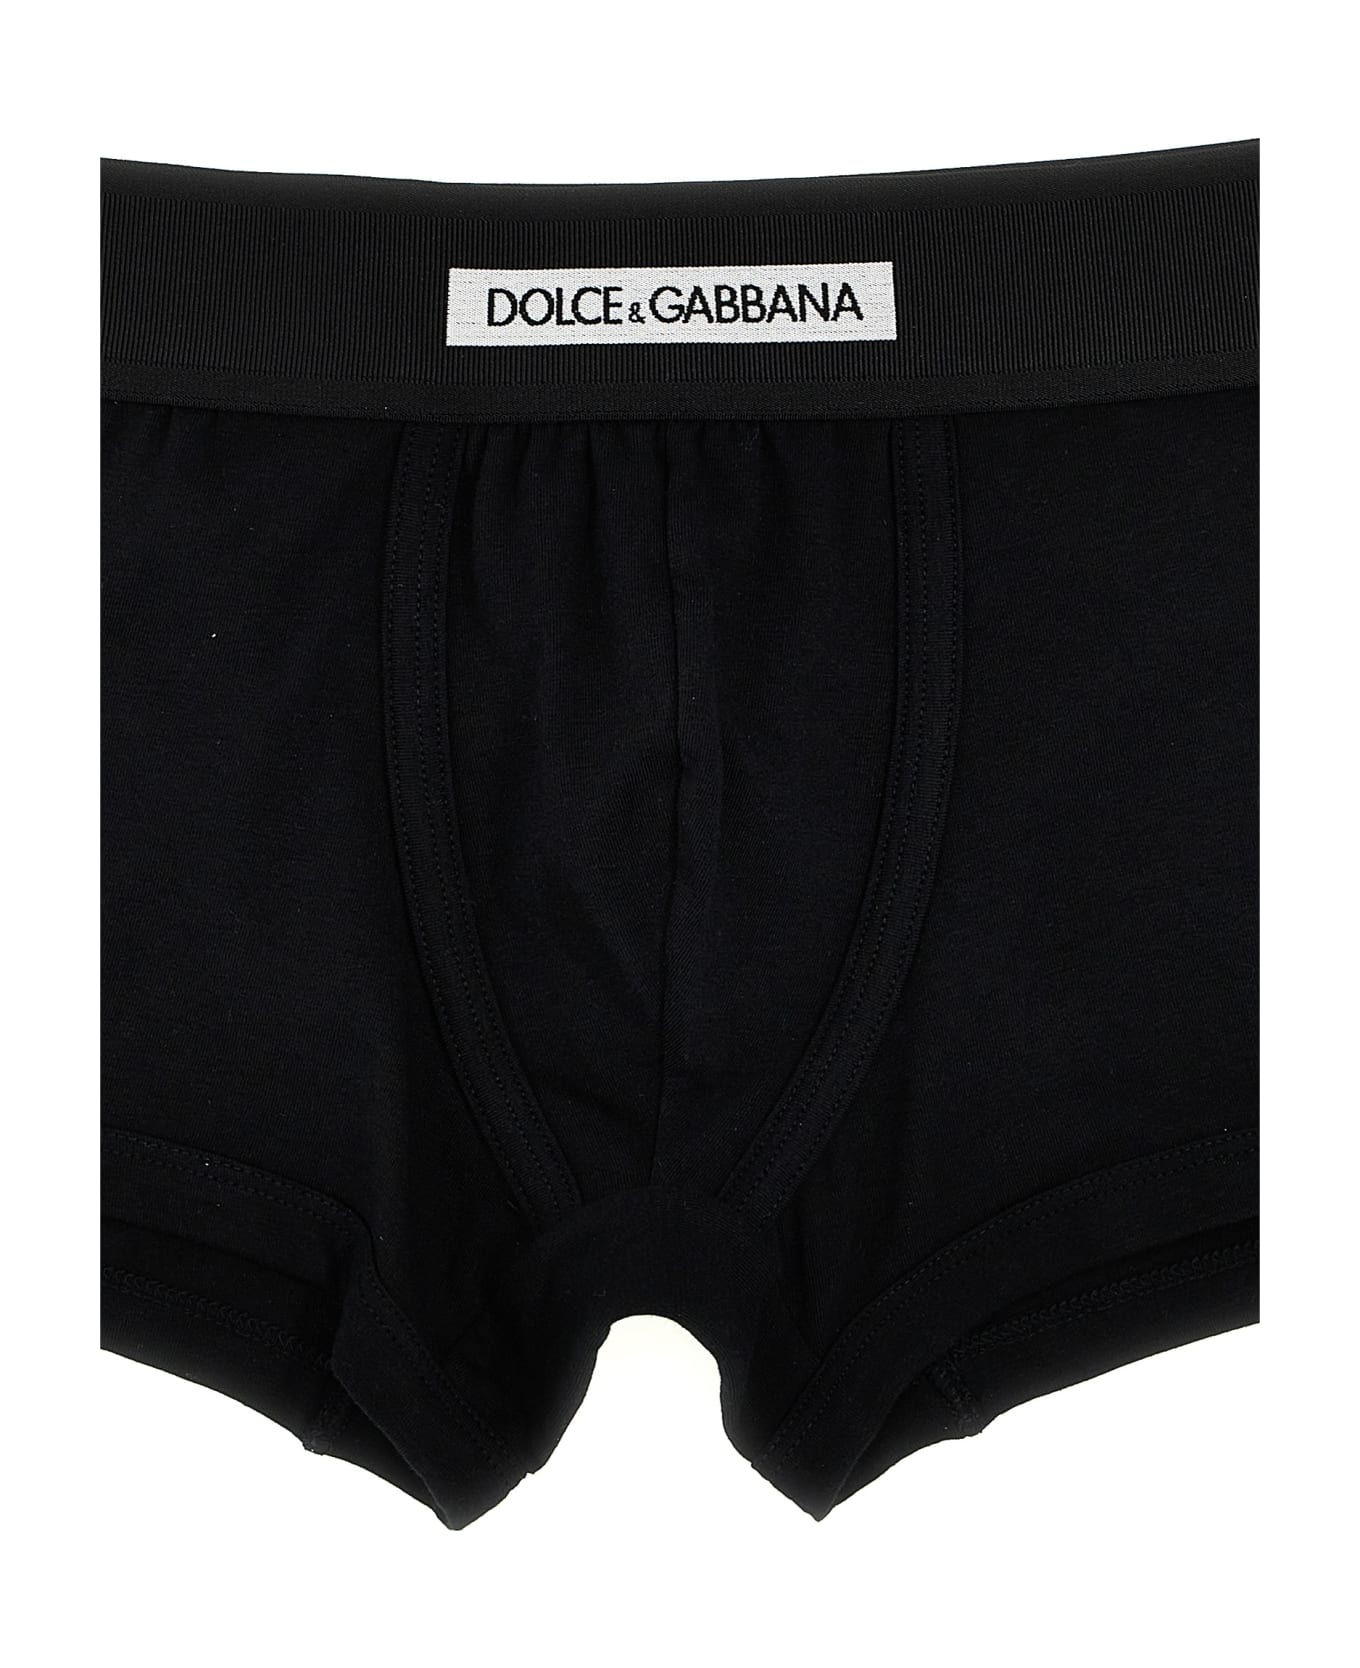 Dolce & Gabbana Boxers - Black ショーツ